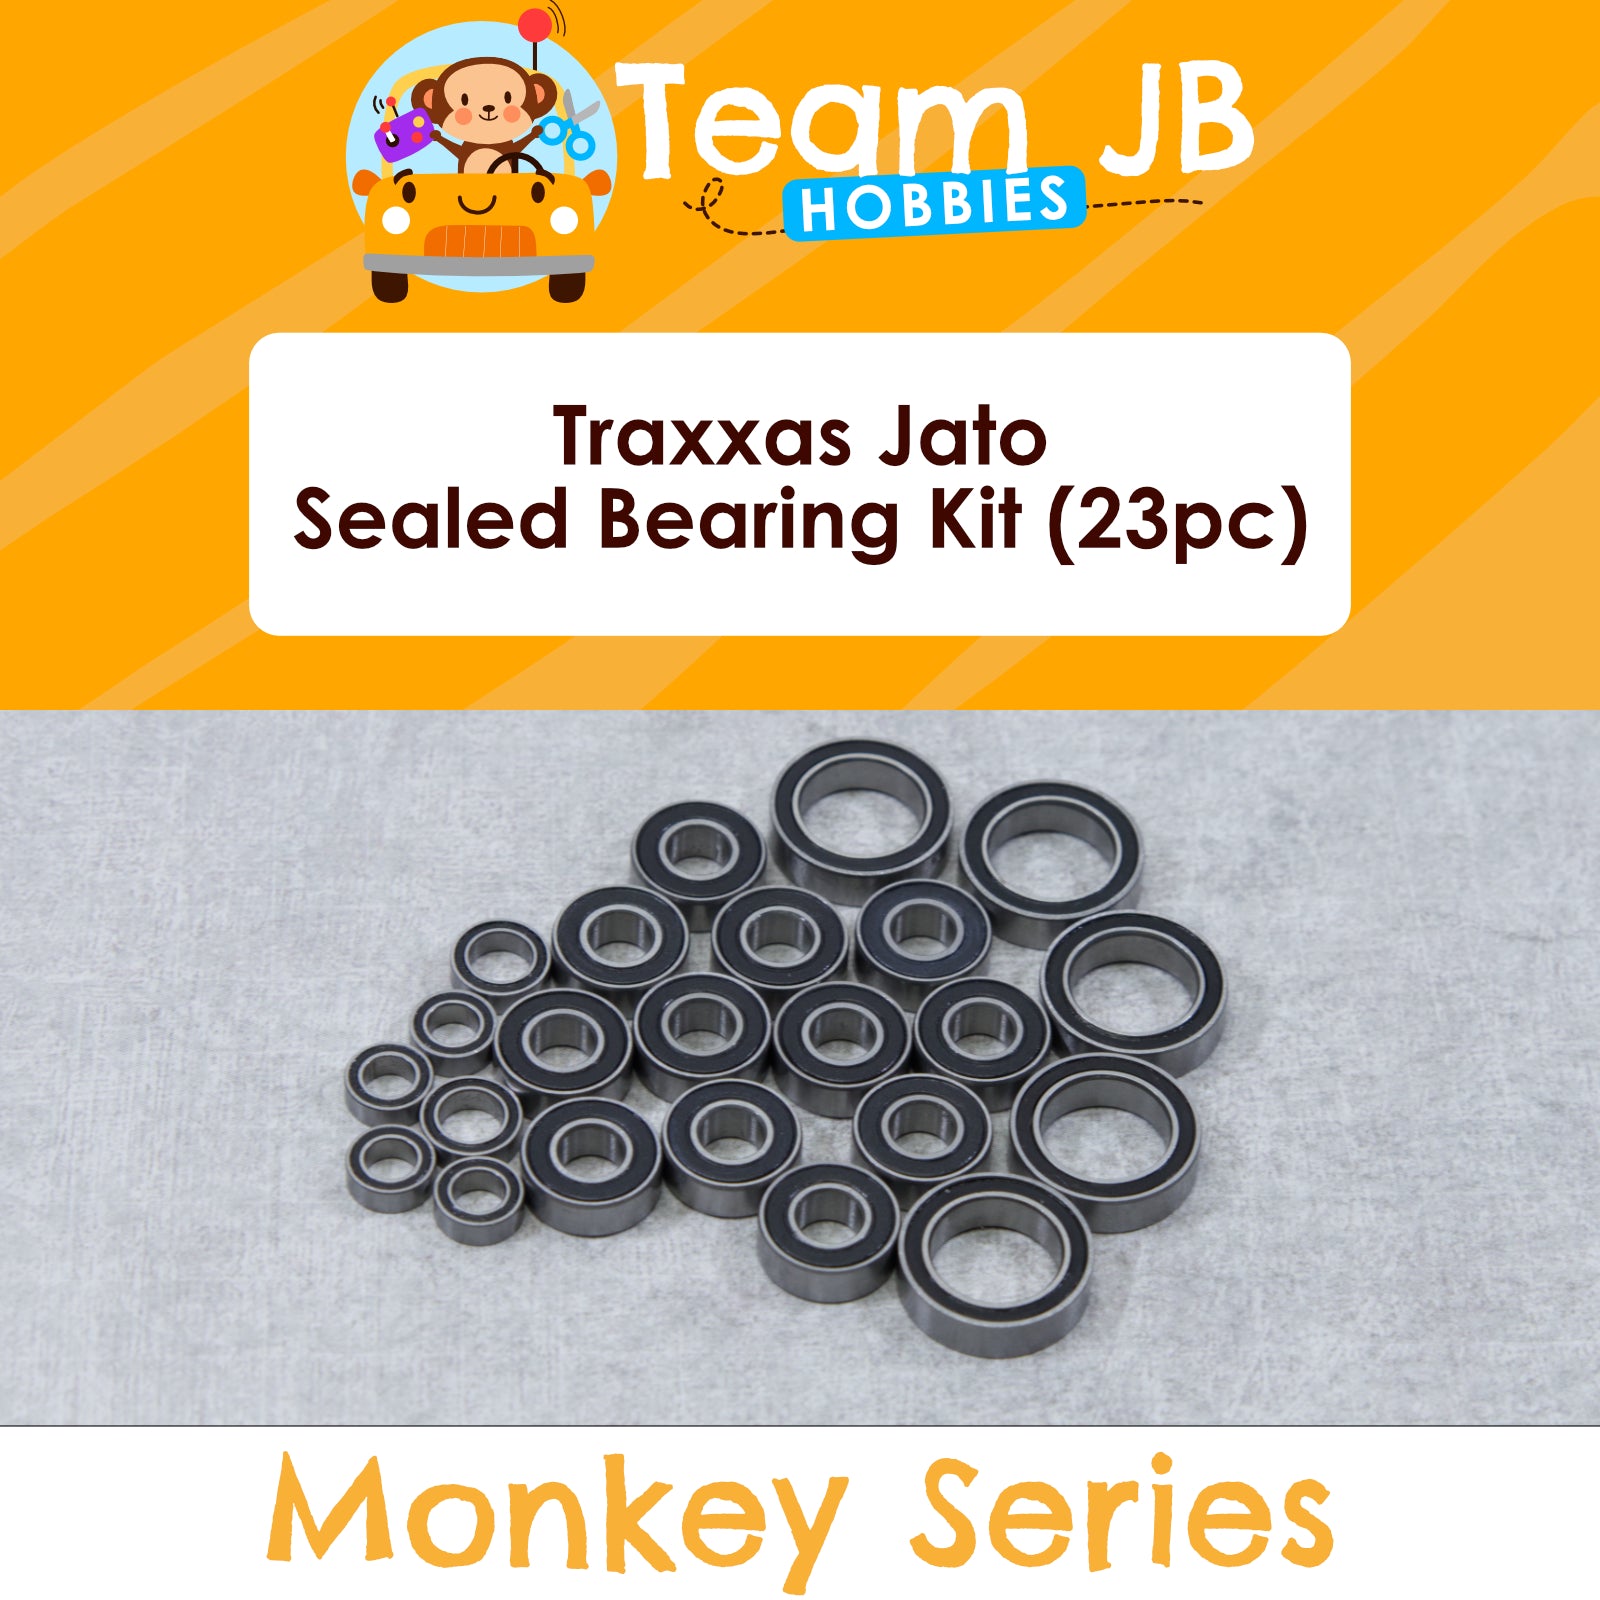 Traxxas Jato - Sealed Bearing Kit